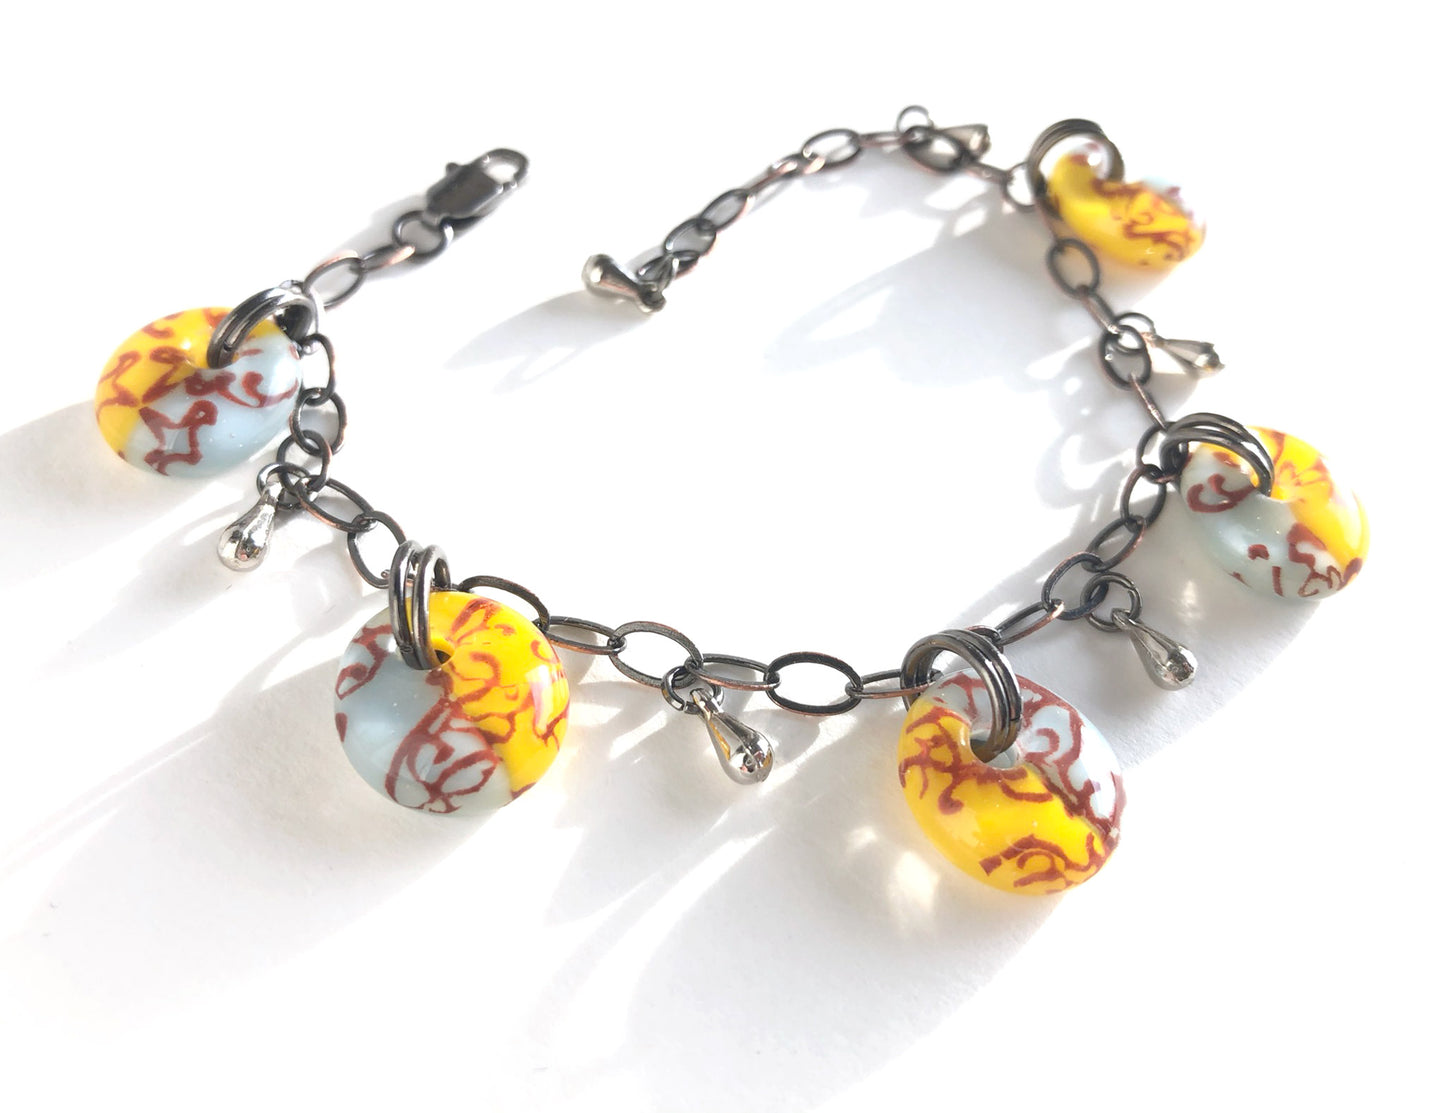 Handmade bracelet with vintage style drops, filigree design and adjustable bronze chain.